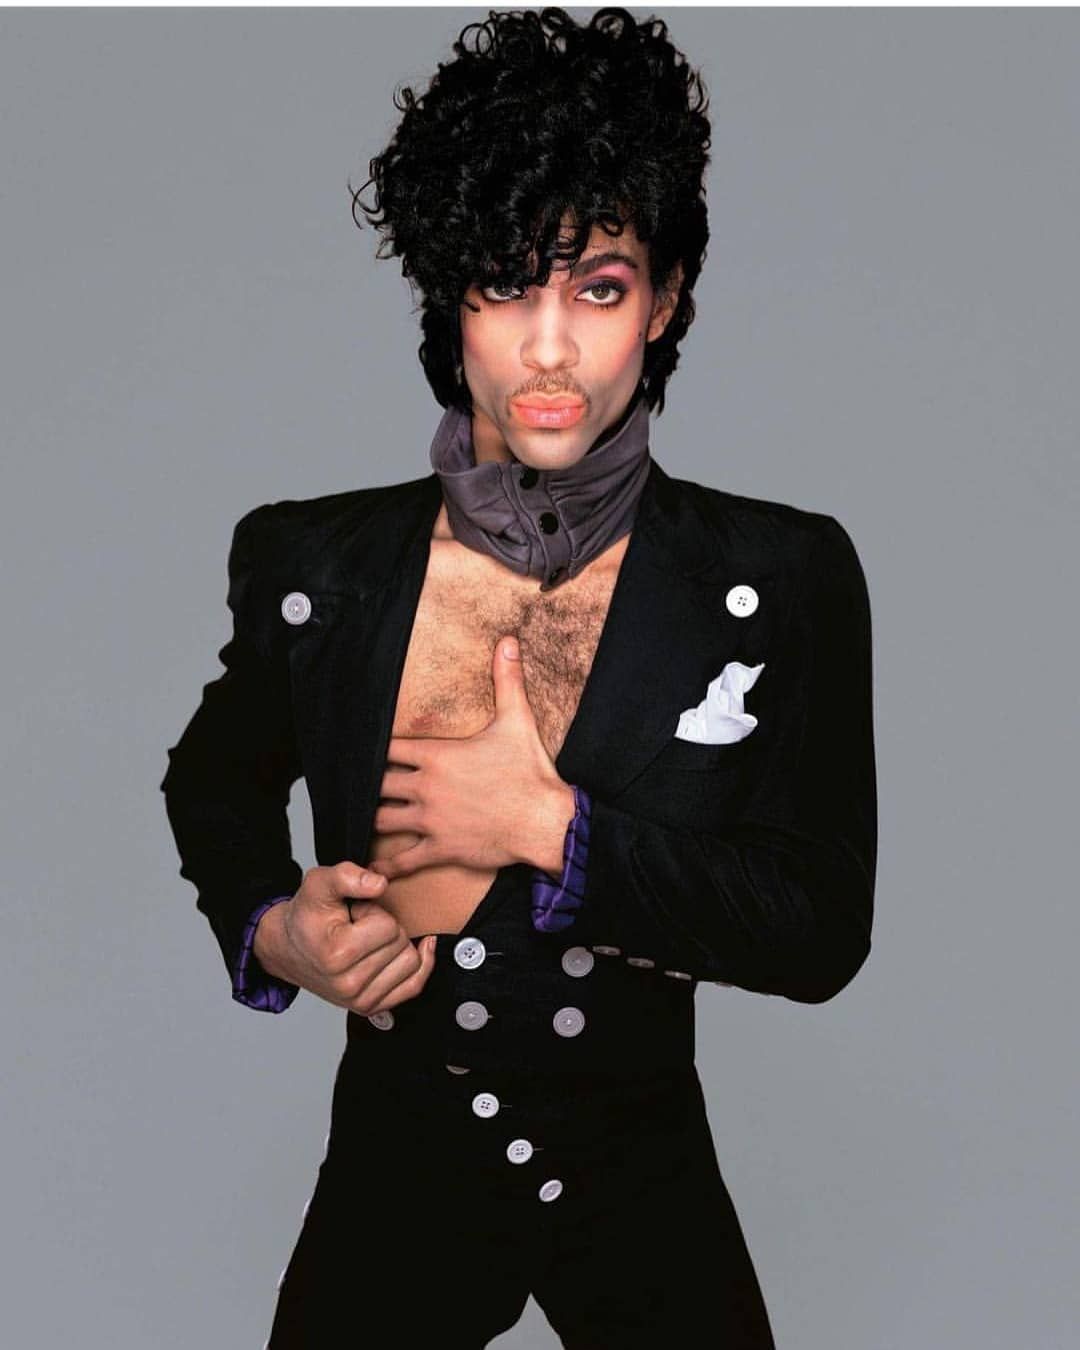 Princely Photo. Prince purple rain, Prince image, Prince musician